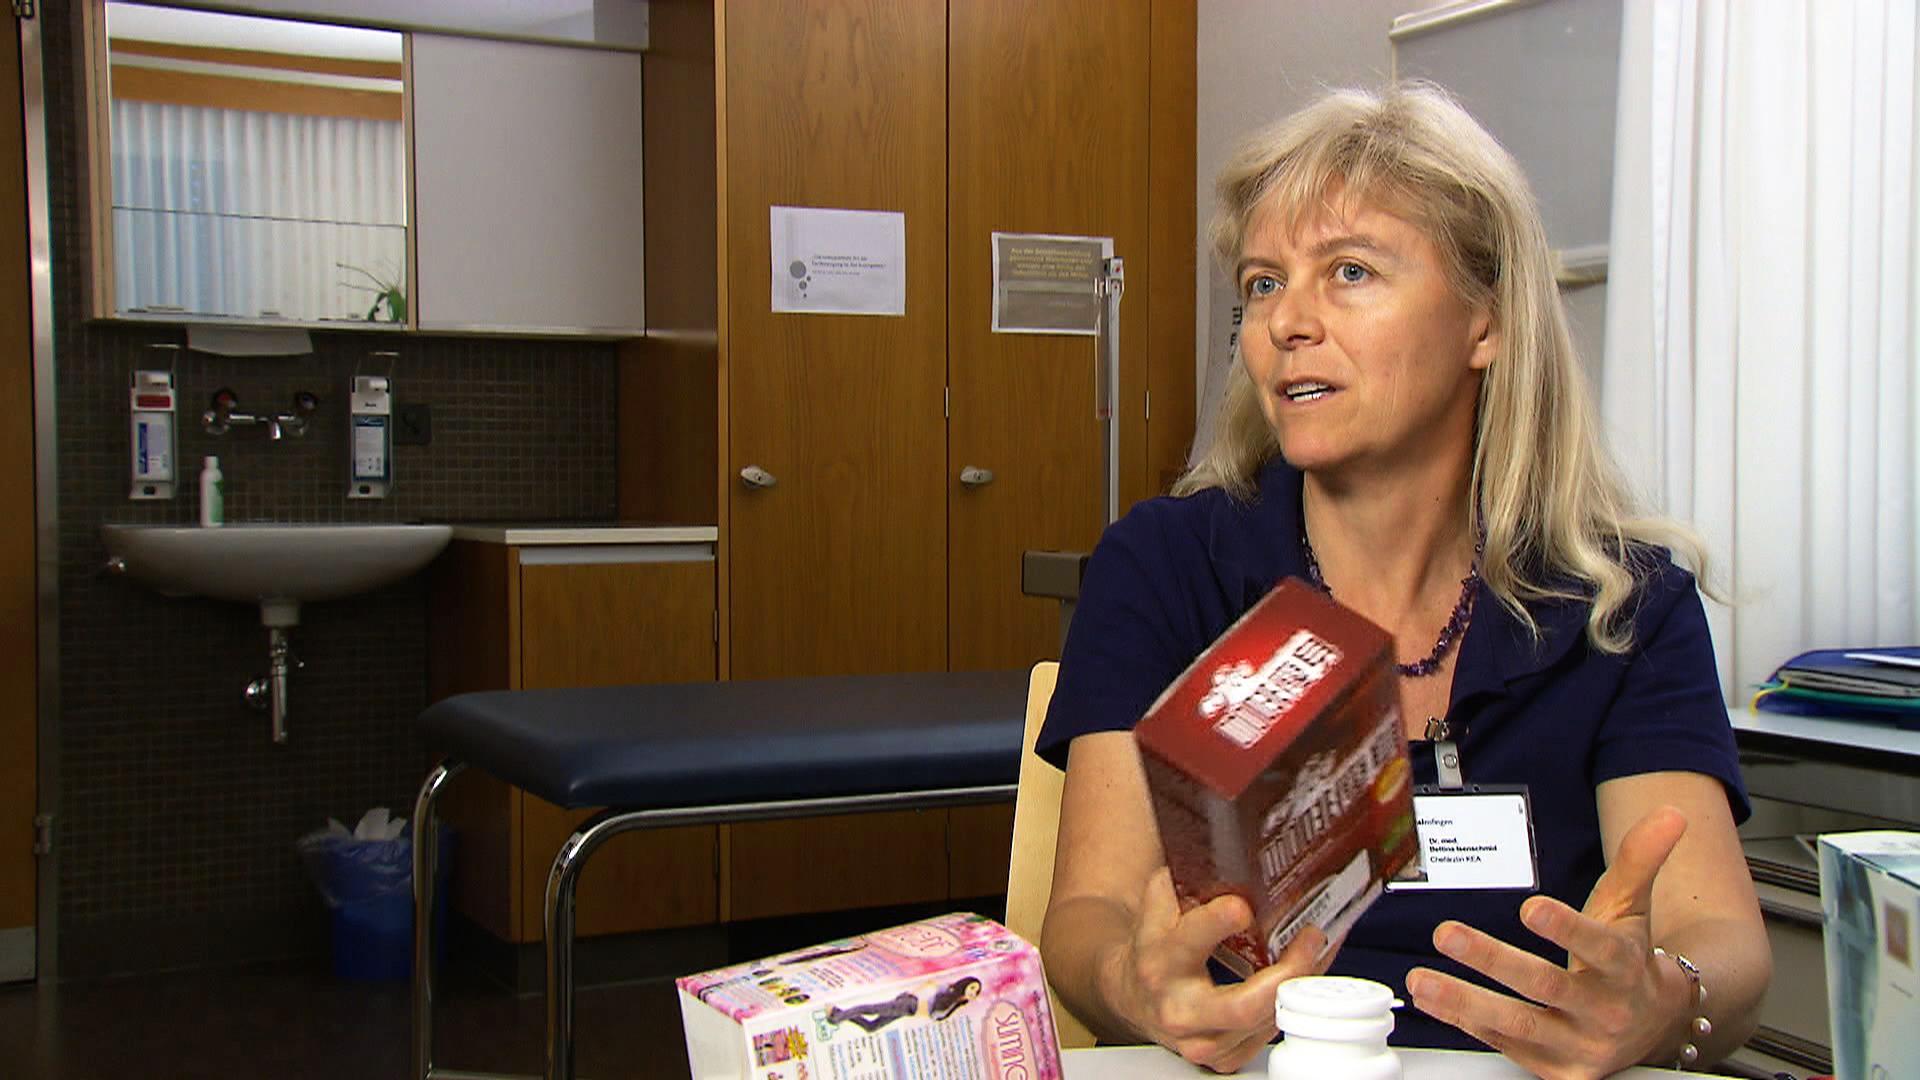 Bettina Isenschmid, head of the department of eating behaviour at Zofingen Hospital